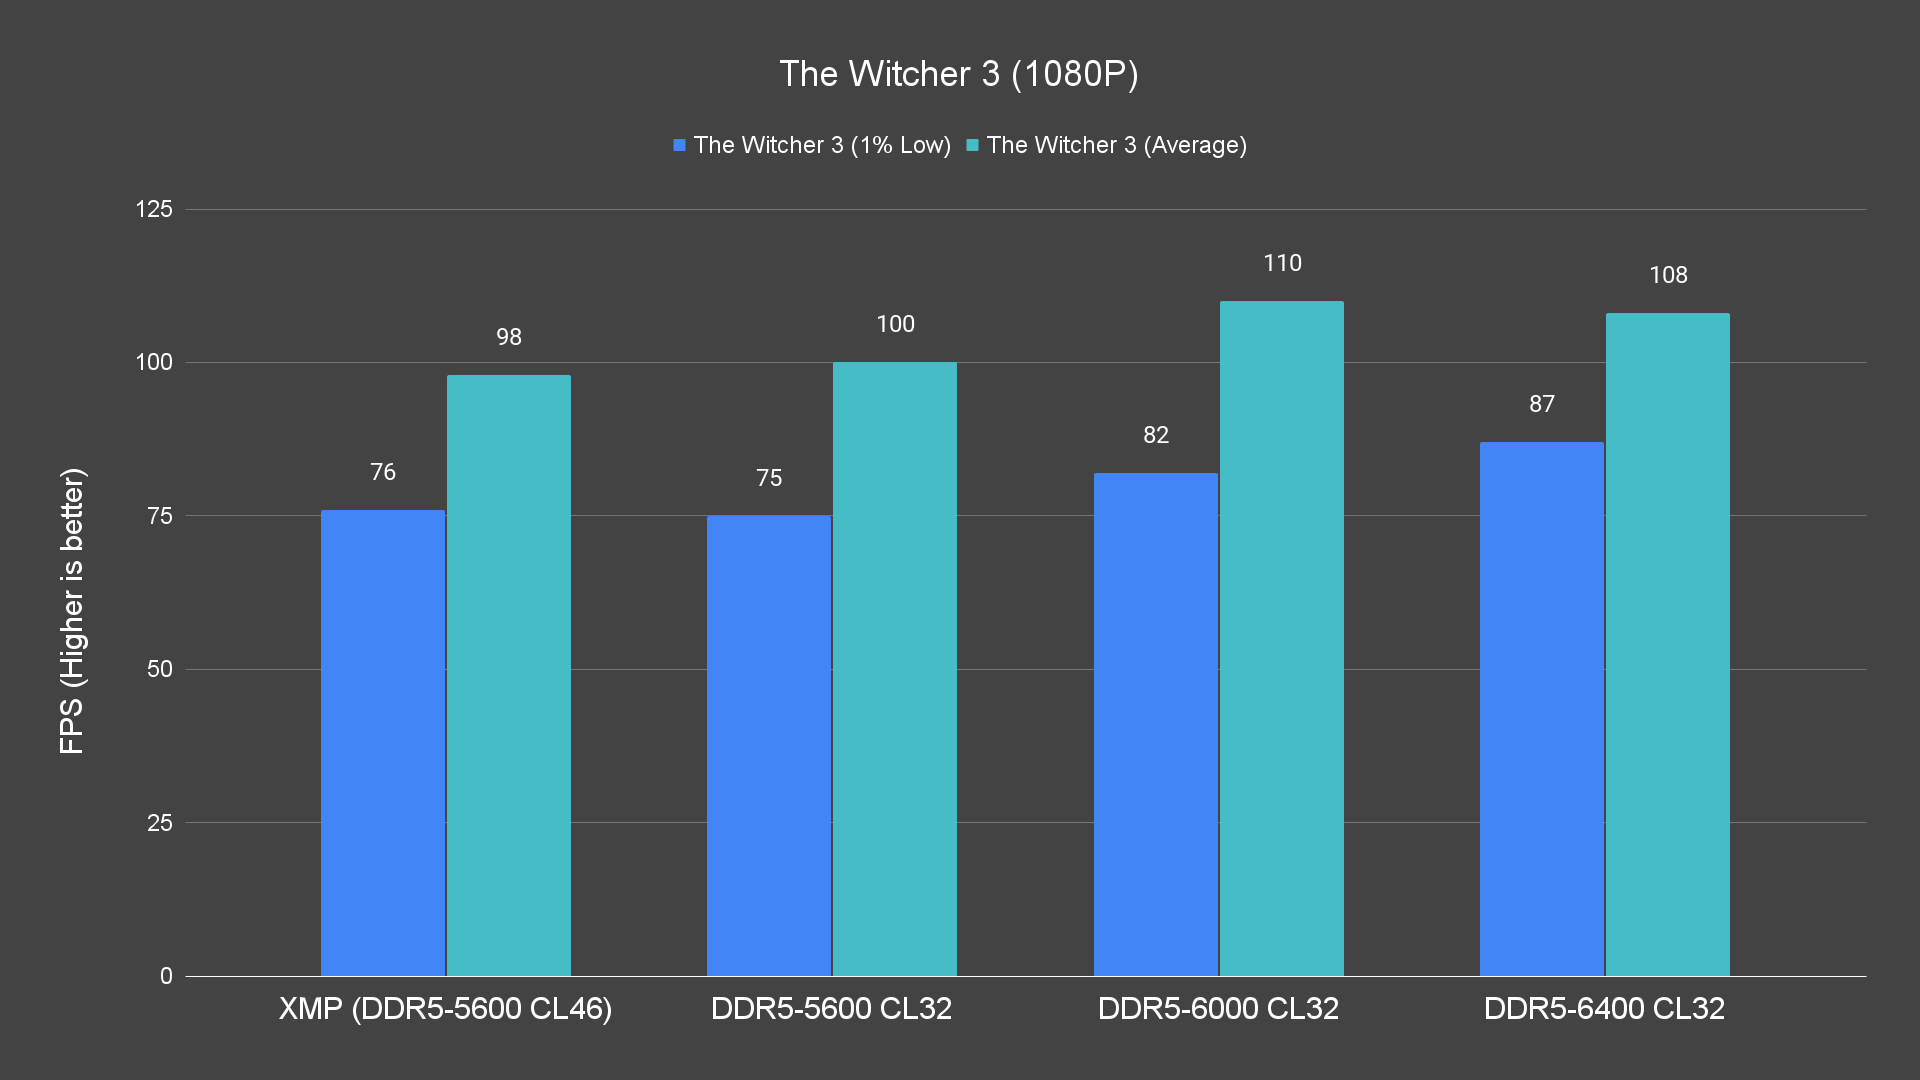 The Witcher 3 (1080P) Bar Chart